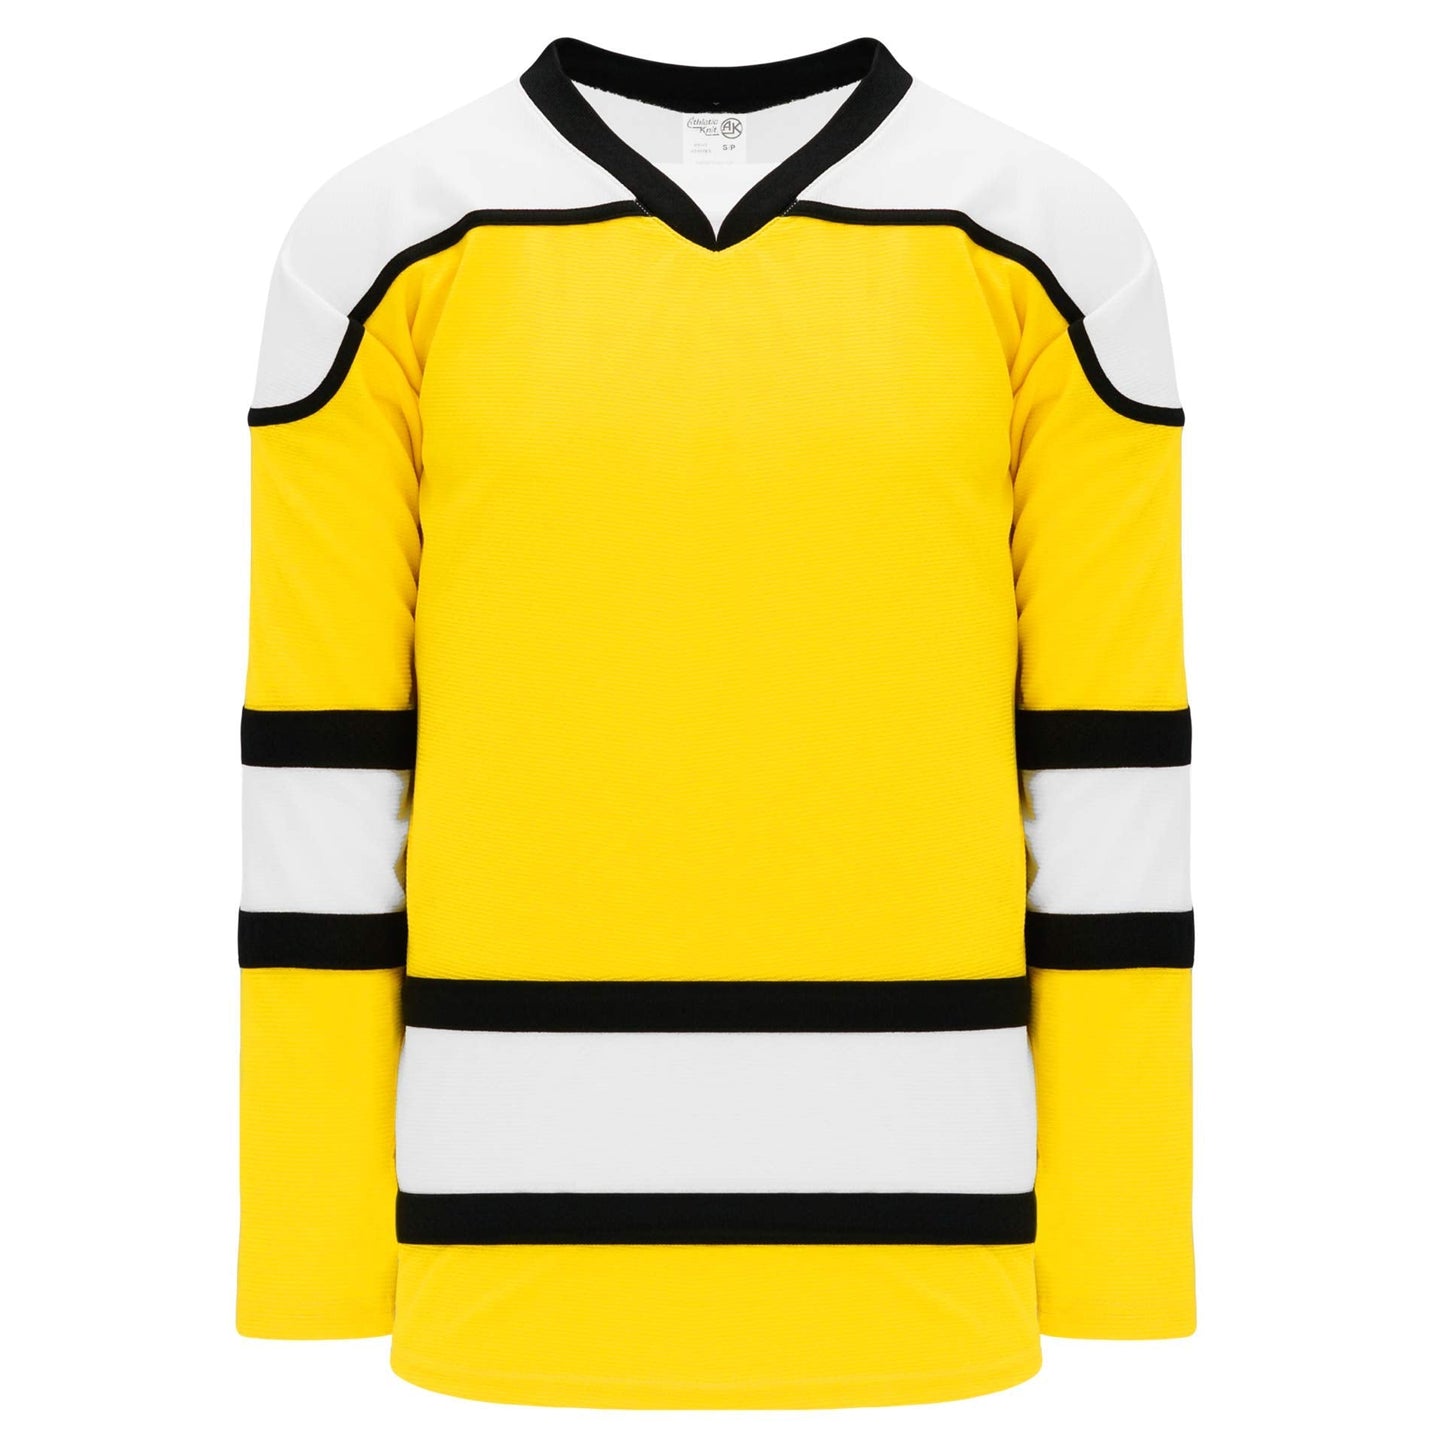 Custom  hockey jerseys no minimum  H7500-256